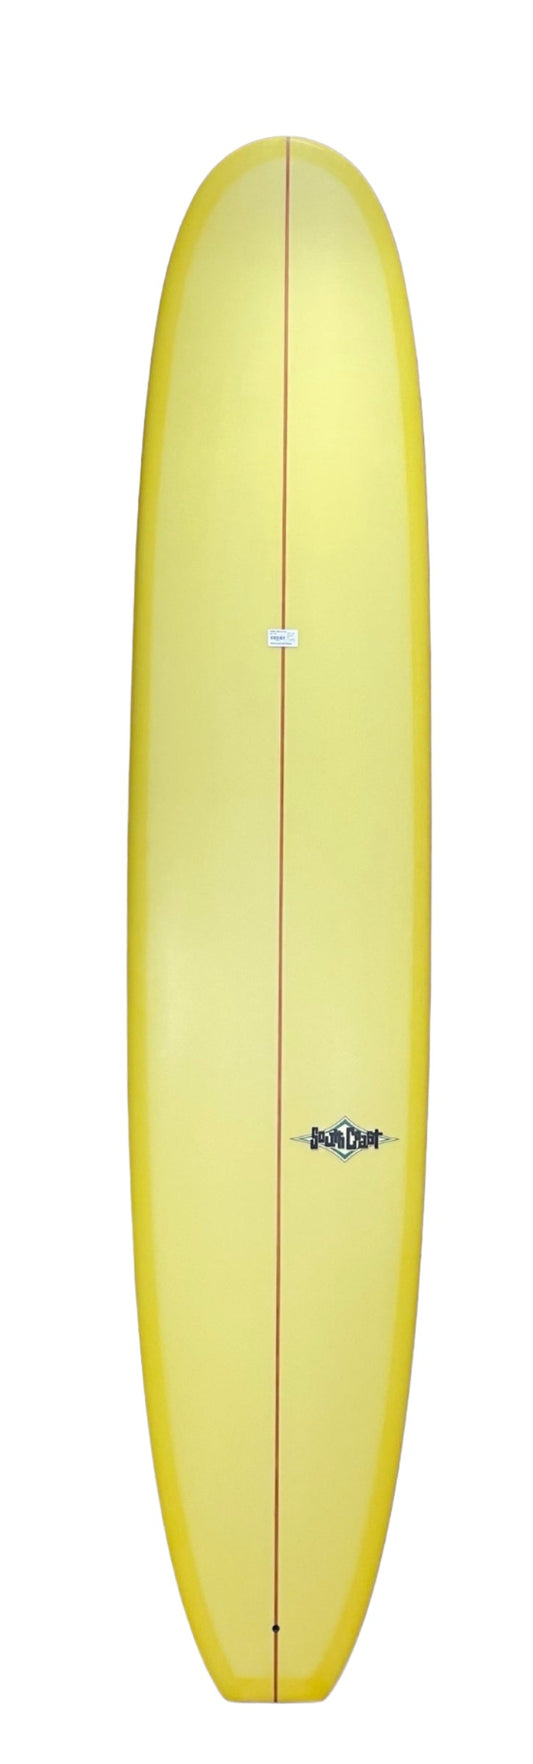 South Coast Tall Can 9'6" Surfboard